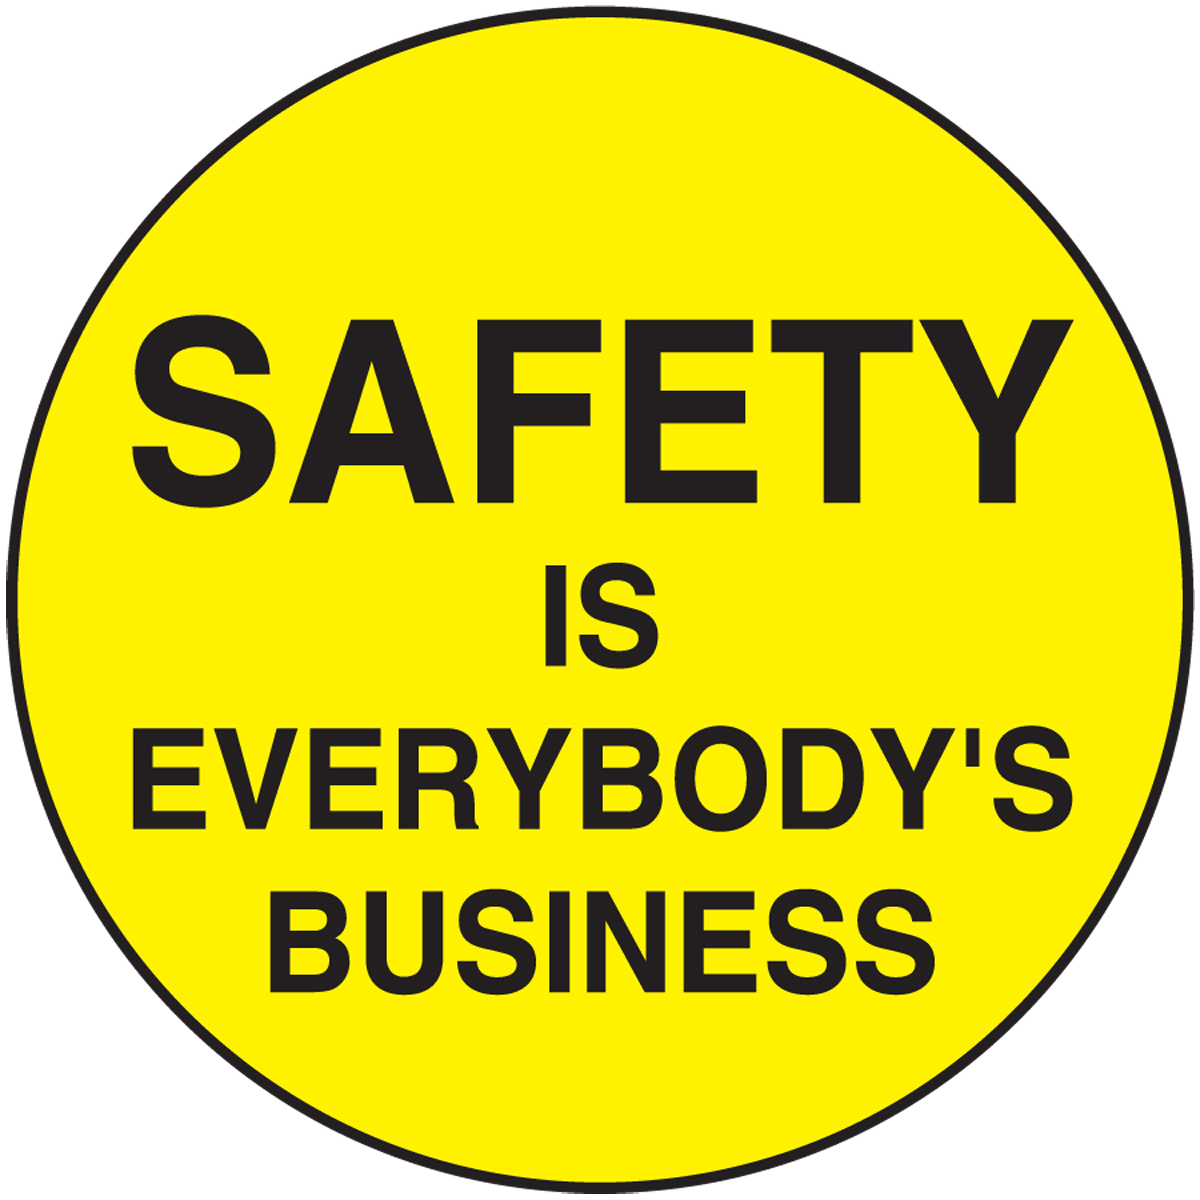 Стикеры Safety. Safety is first наклейка. Safety precautions. Change is a Team effort надпись.